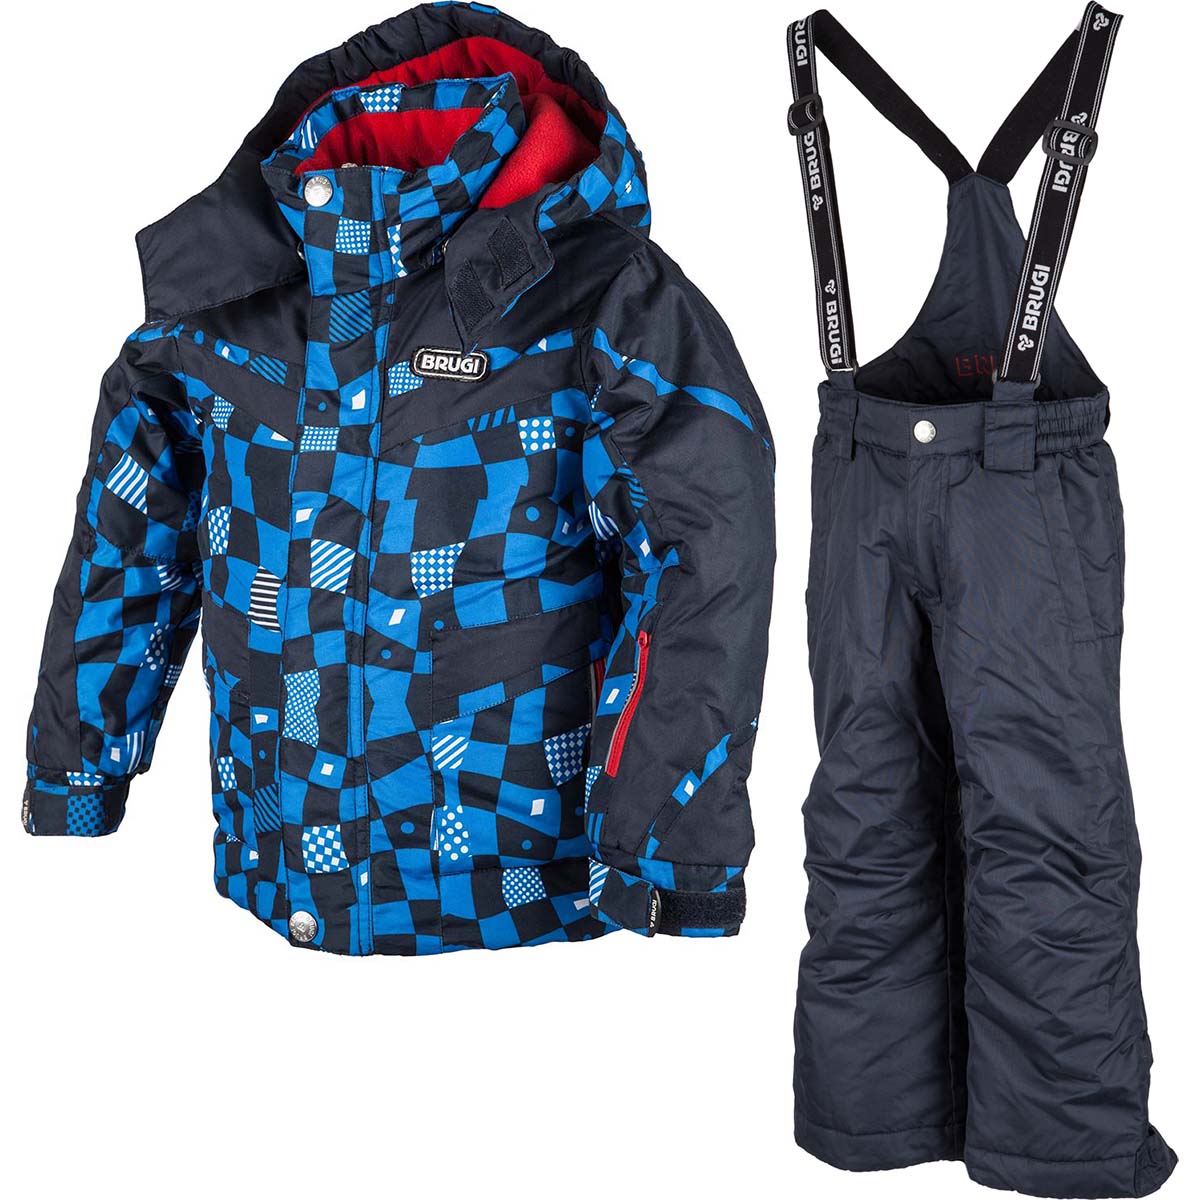 SET JNR BOYS - Winter children set jacket and pants